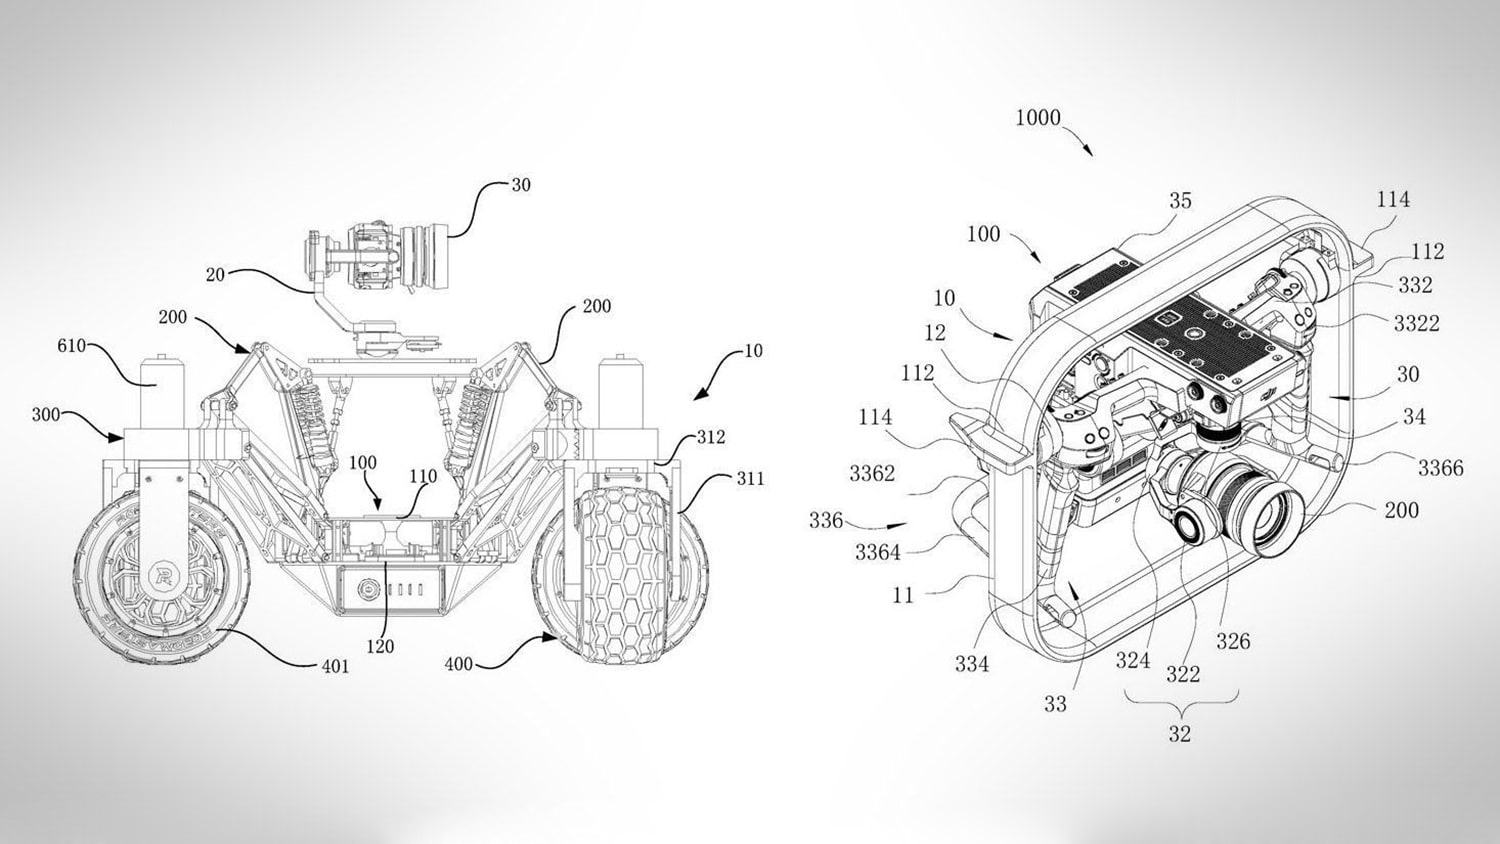 The illustration of DJI camera car patent.